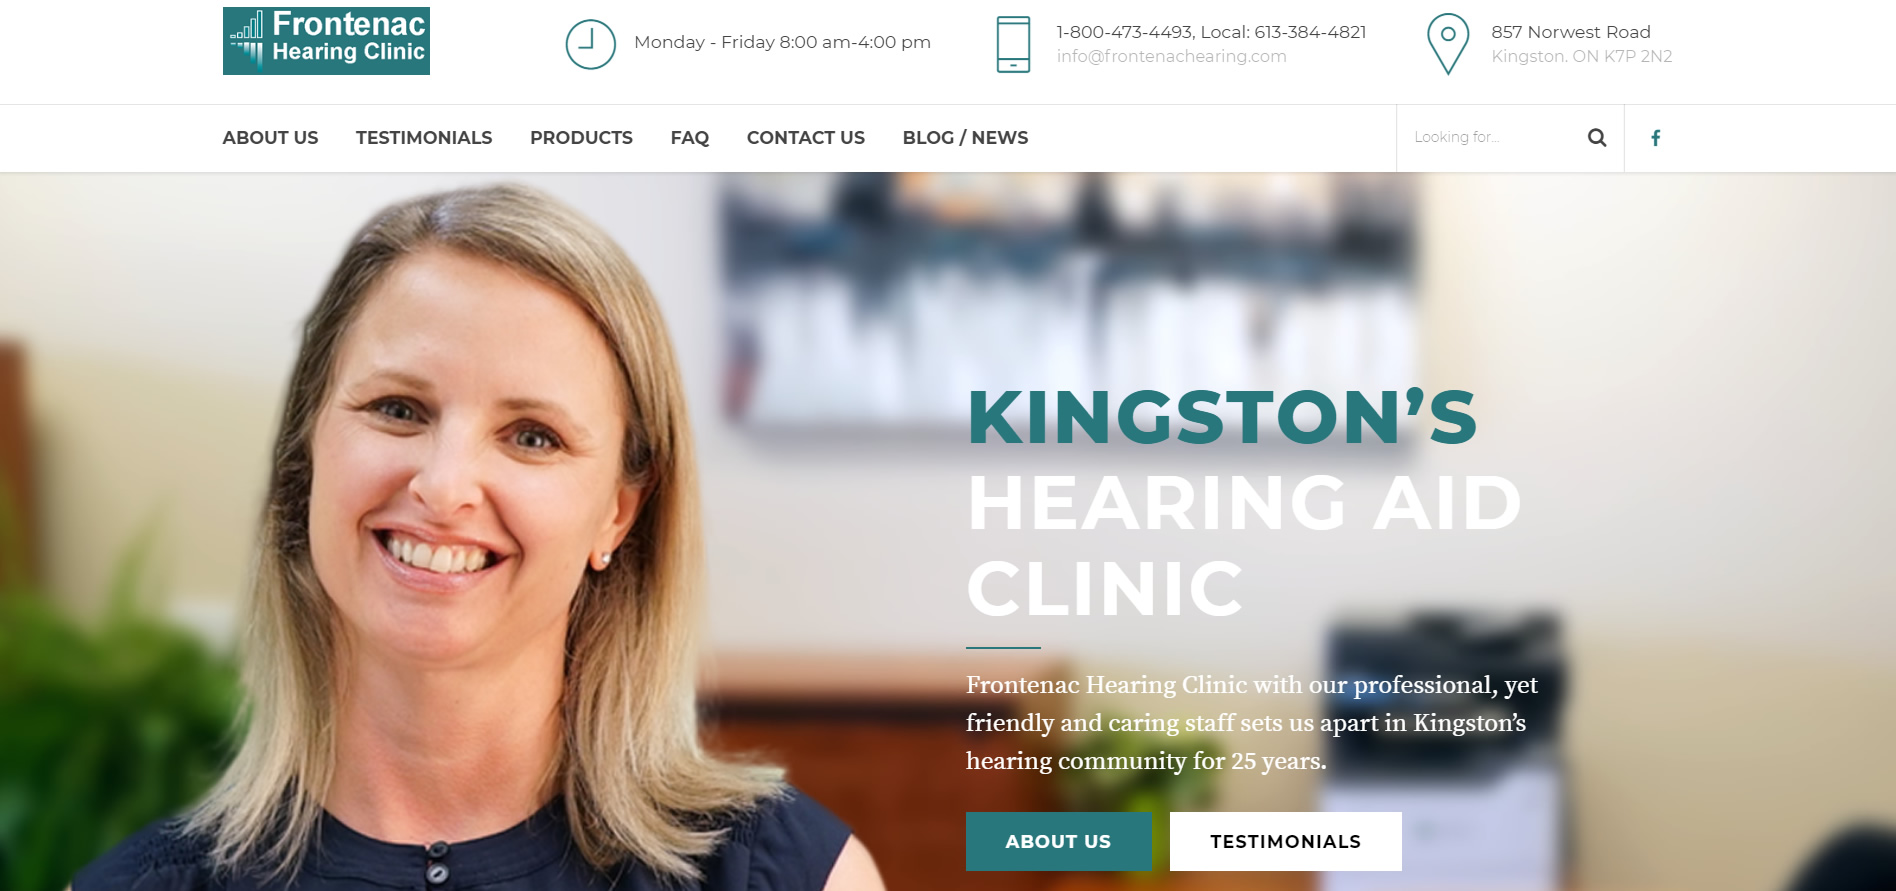 Mobile Website Design for Frontenac Hearing Clinic in Kingston Ontario